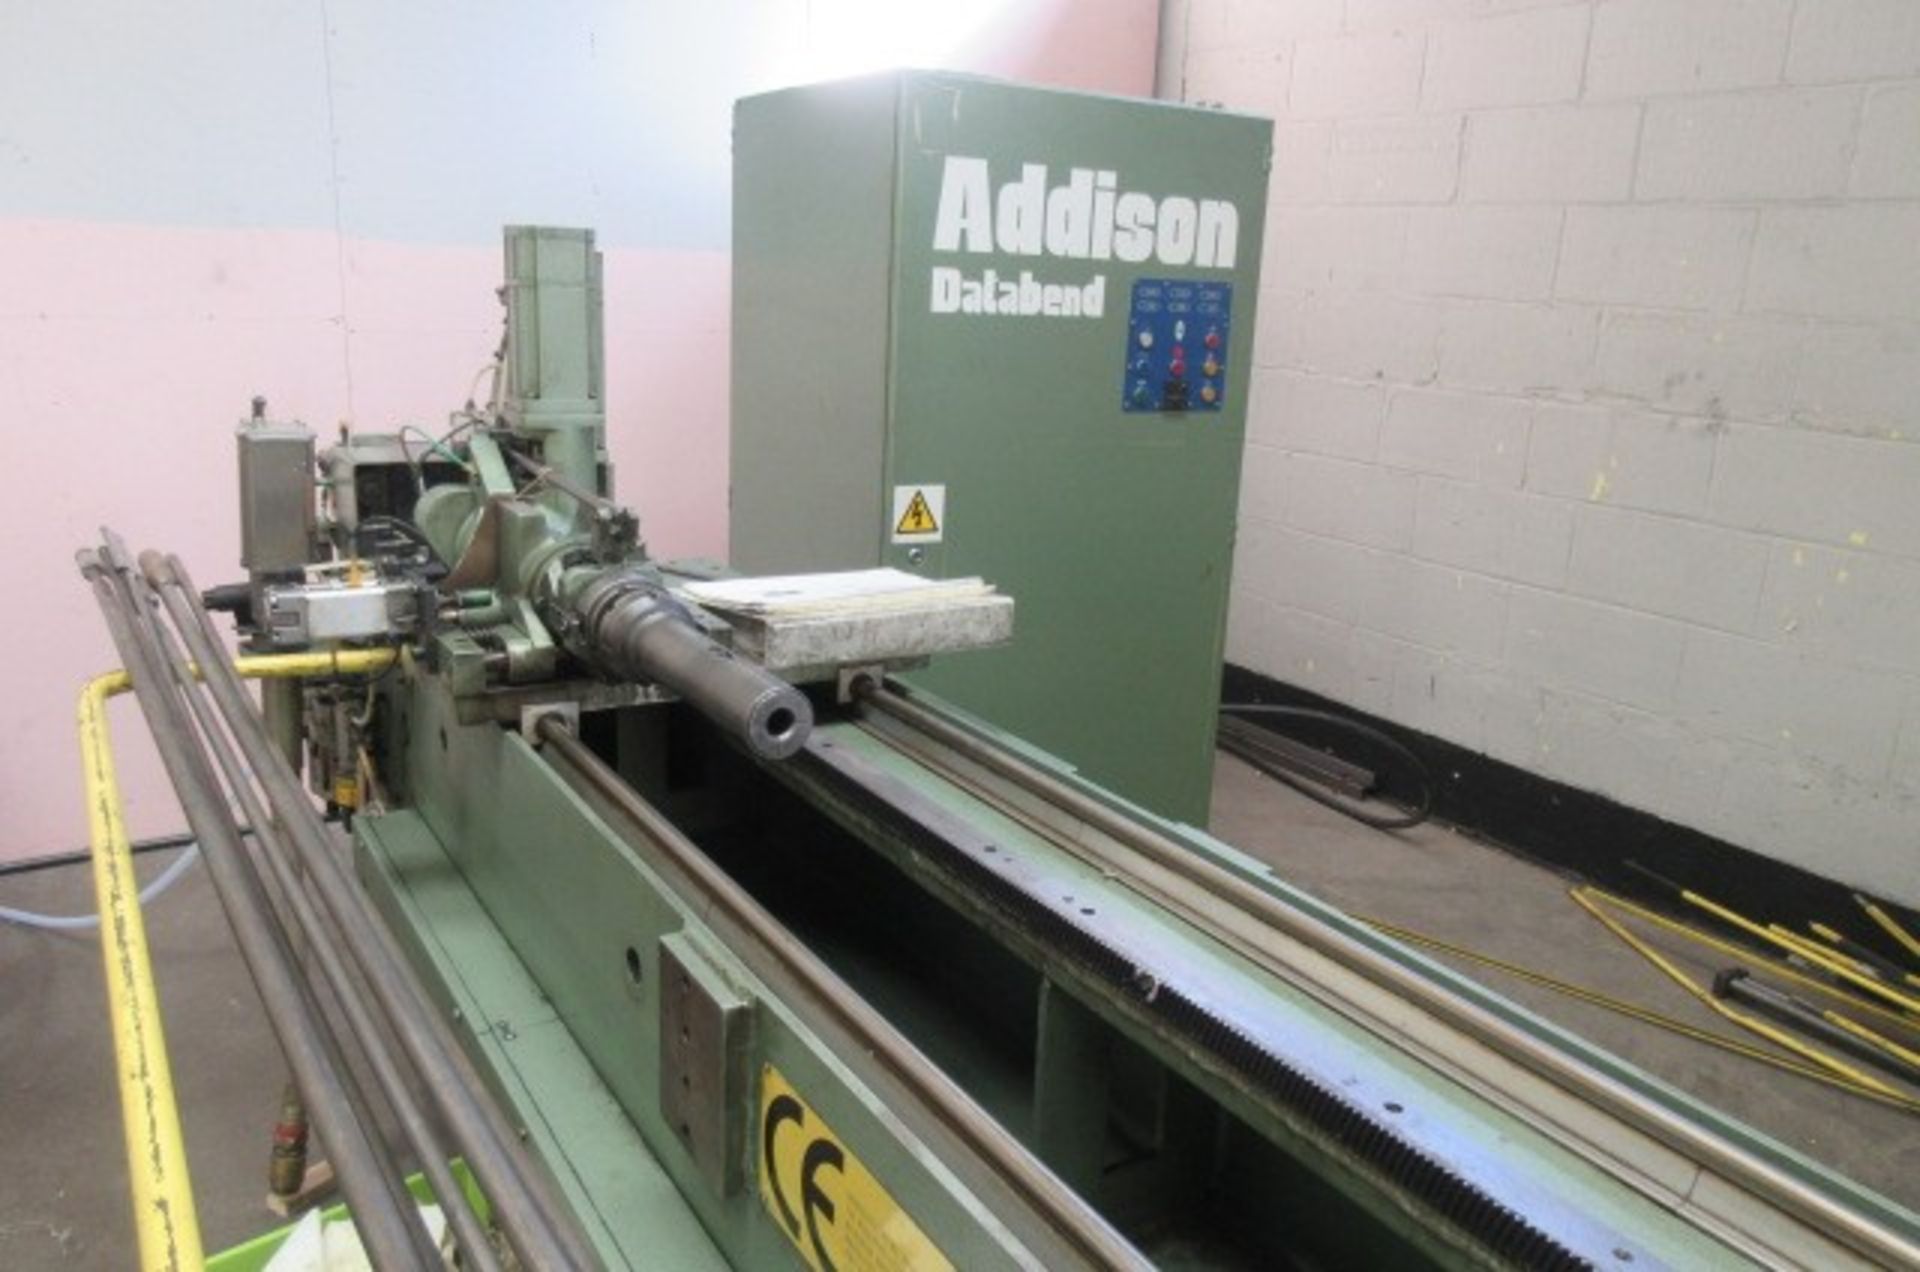 Addison Databend DB40F CNC tube bending machine. (1997) - Image 4 of 5